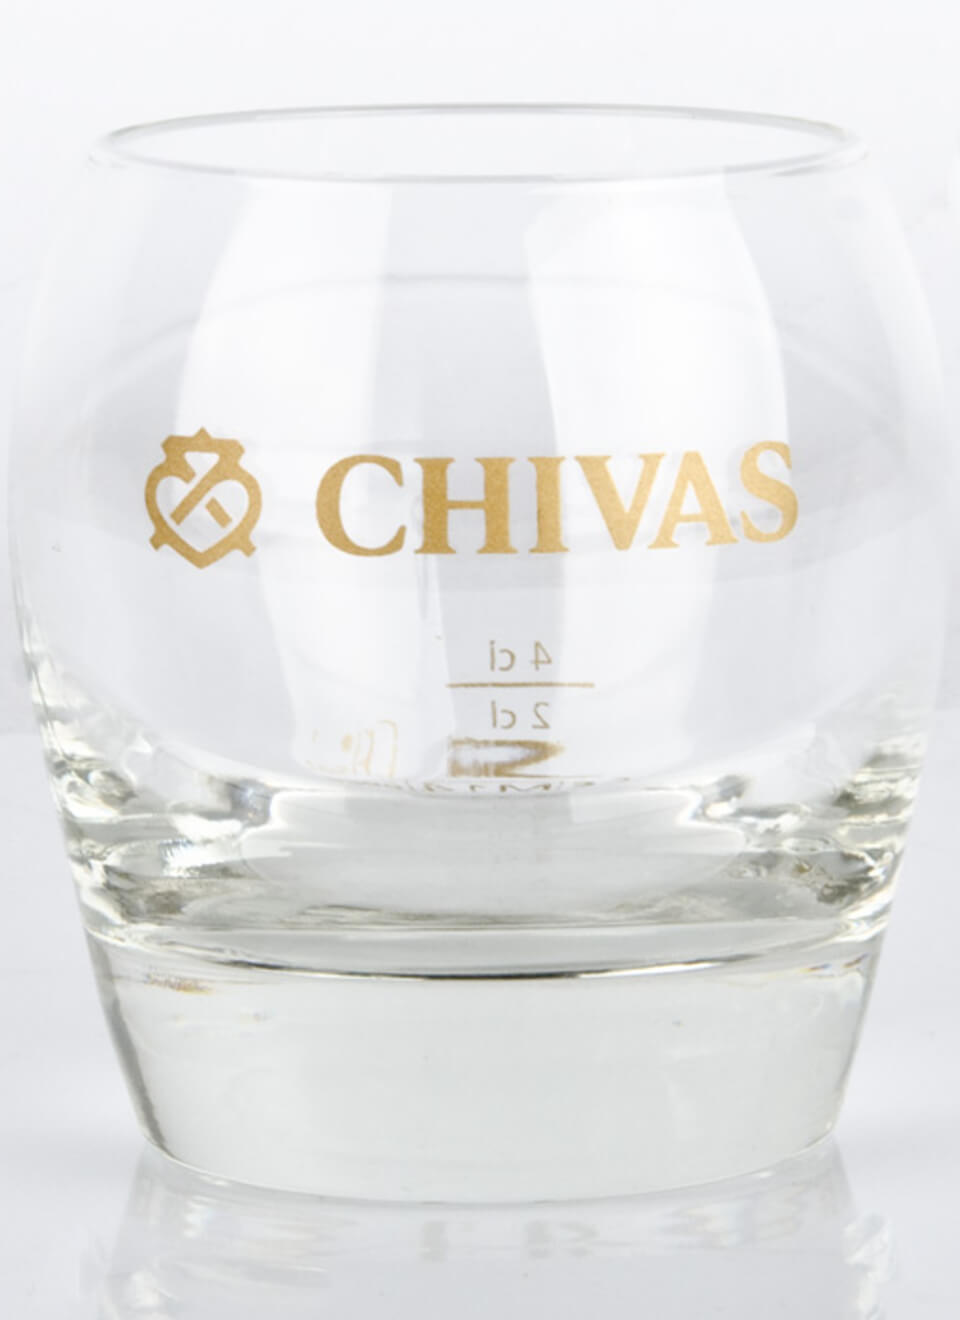 Chivas Regal Whisky Tumbler